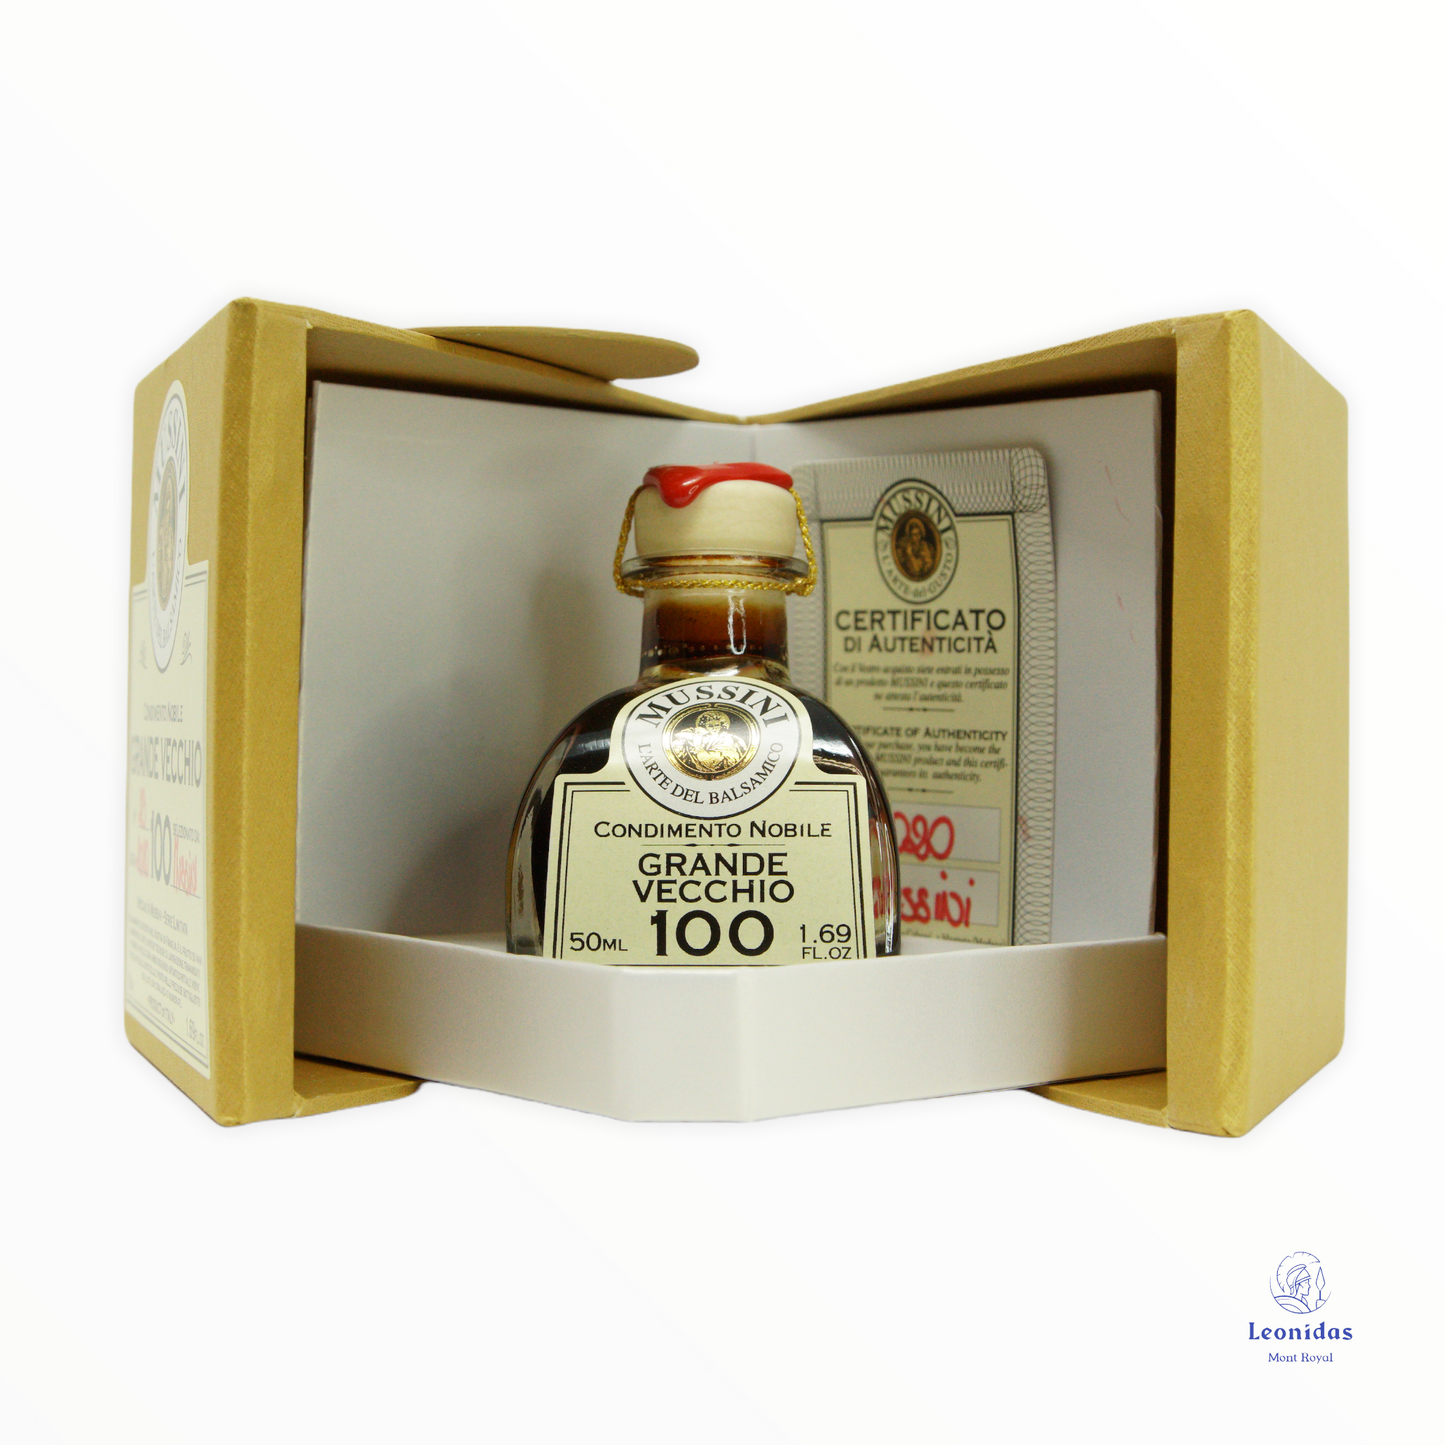 GRANDE VECCHIO Balsamic Vinegar Mussini 100 years old